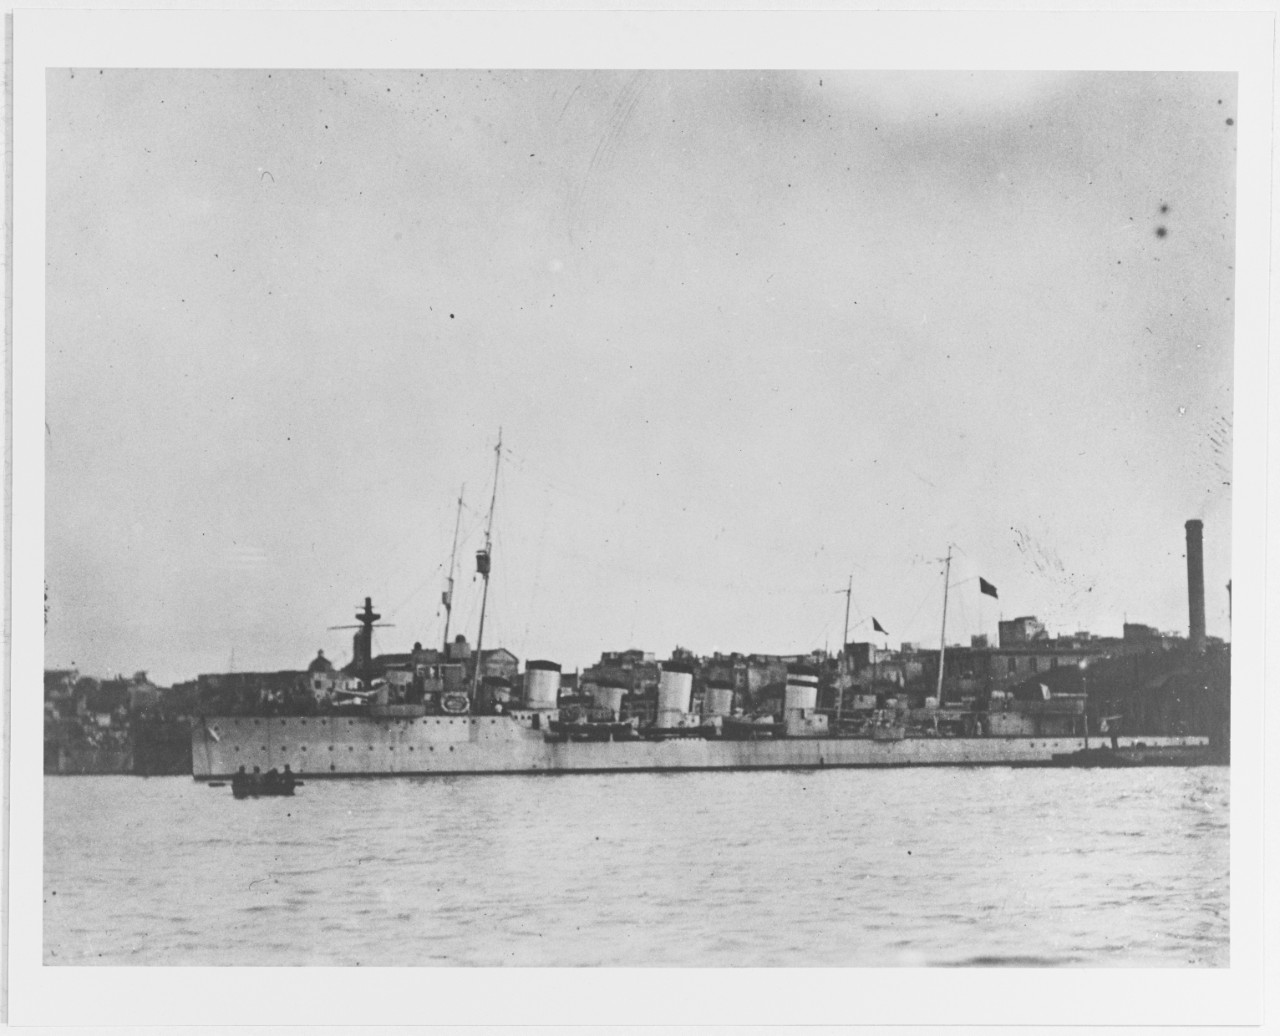 NIBBIO (Italian Destroyer, 1918-20)